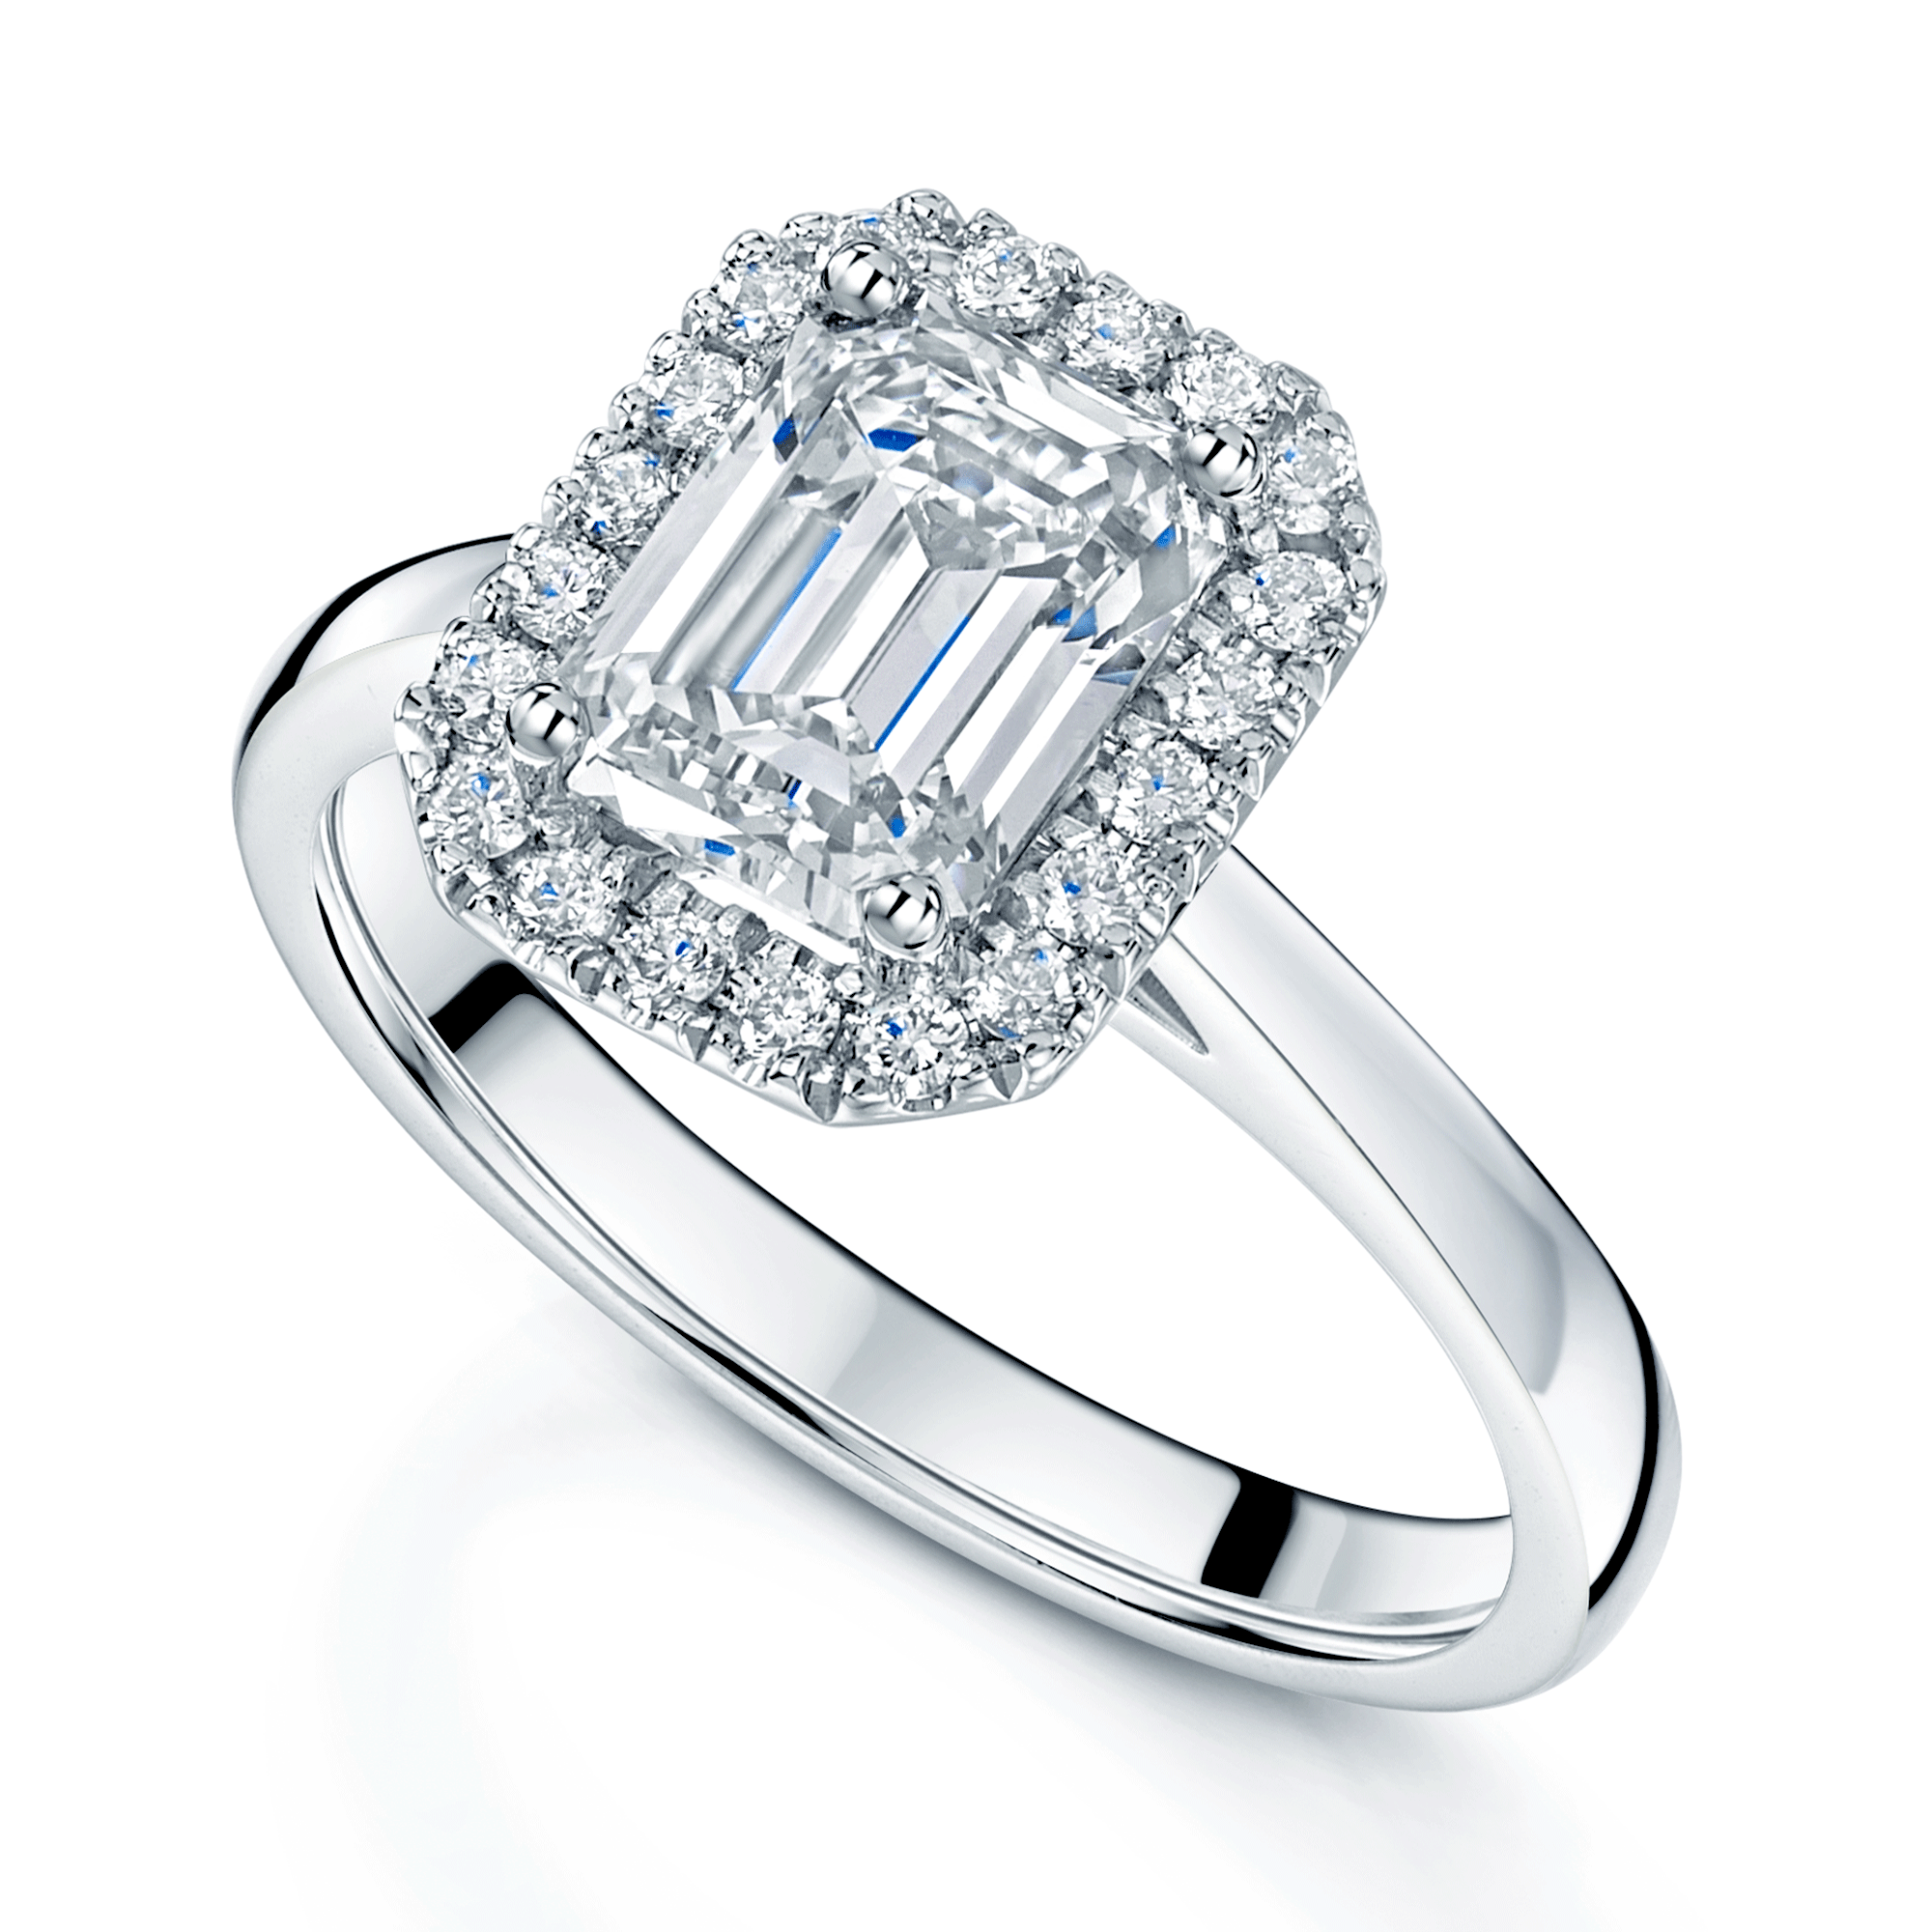 Platinum GIA Certificated Emerald Cut Diamond 1.64 Carat Halo Ring